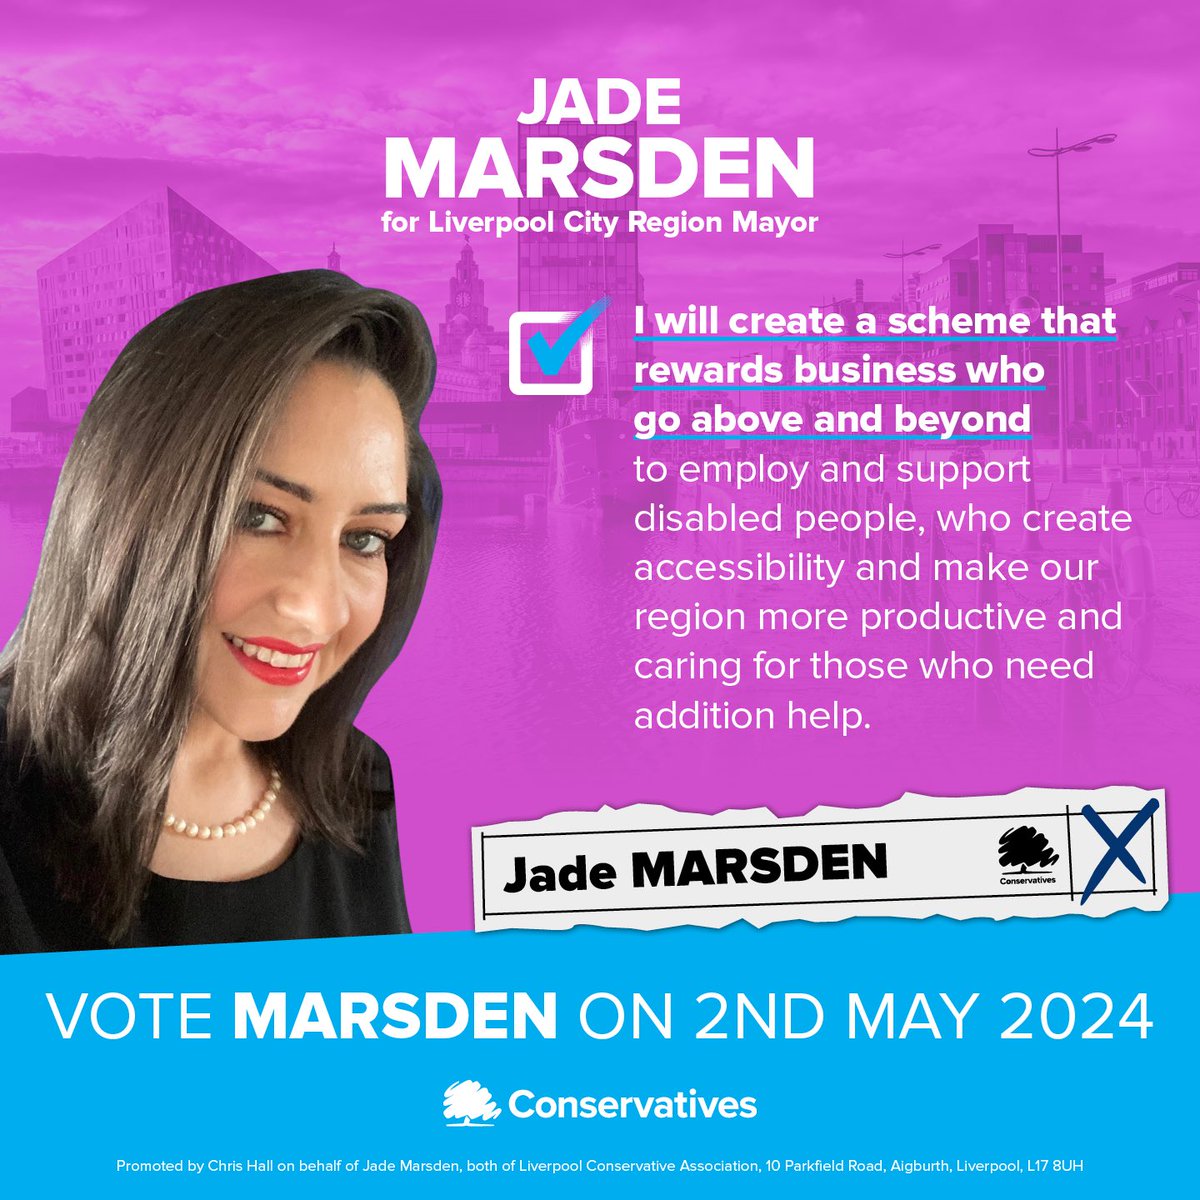 #VoteMarsden for a fairer Liverpool City Region.